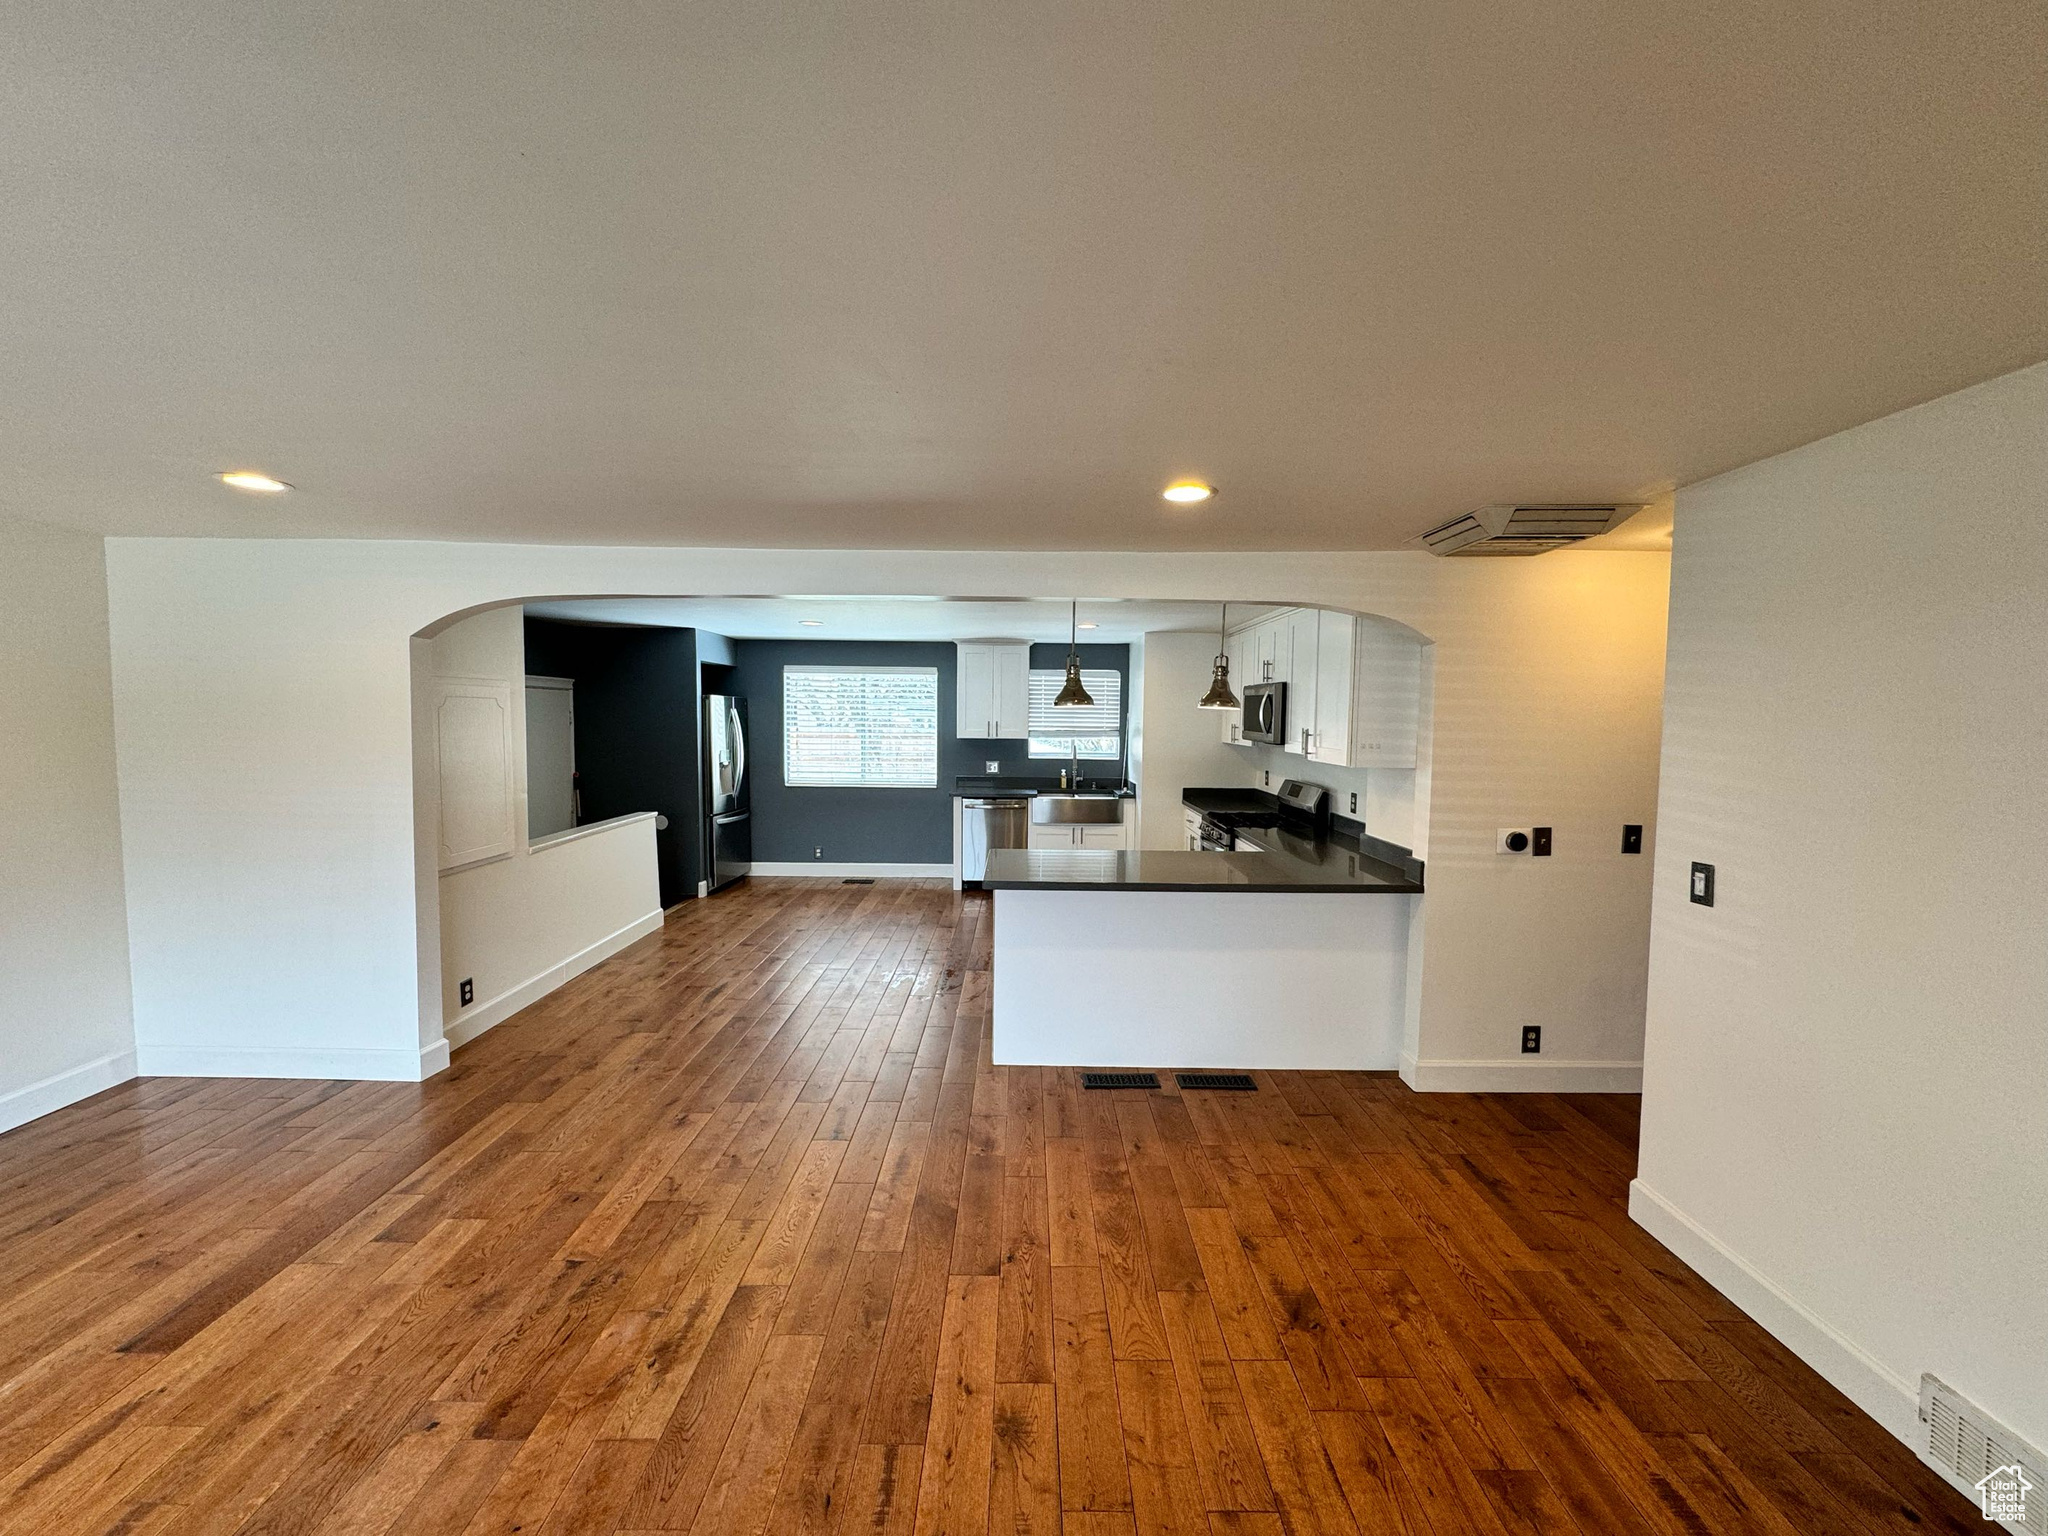 Kitchen featuring pendant lighting, white cabinetry, kitchen peninsula, and dark hardwood / wood-style floors